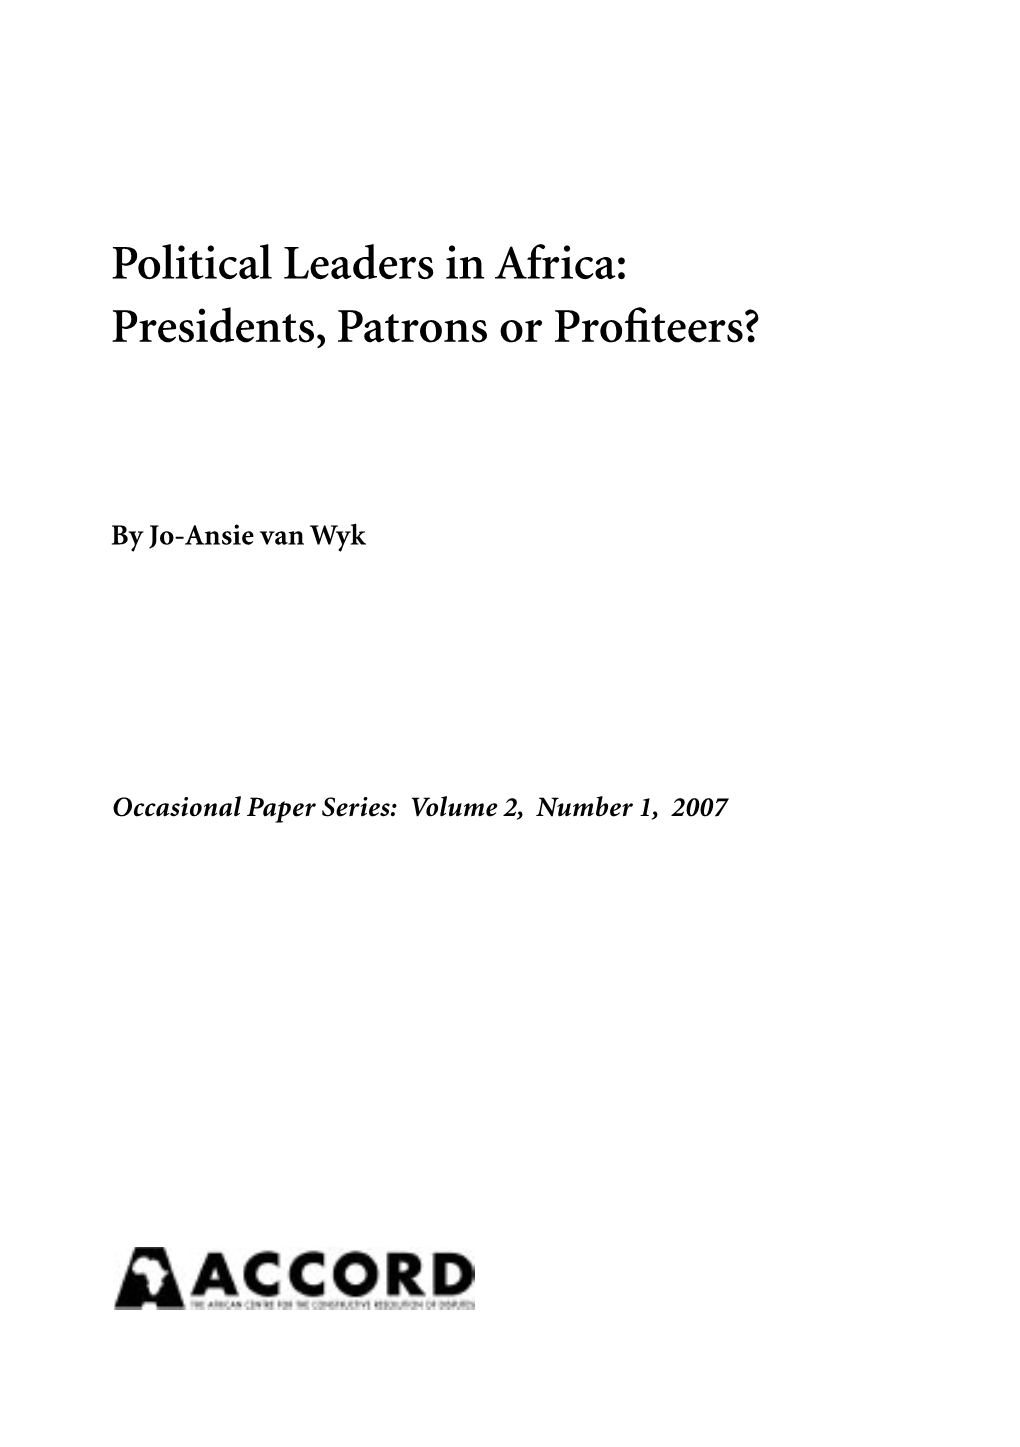 Political Leaders in Africa: Presidents, Patrons Or Profiteers?